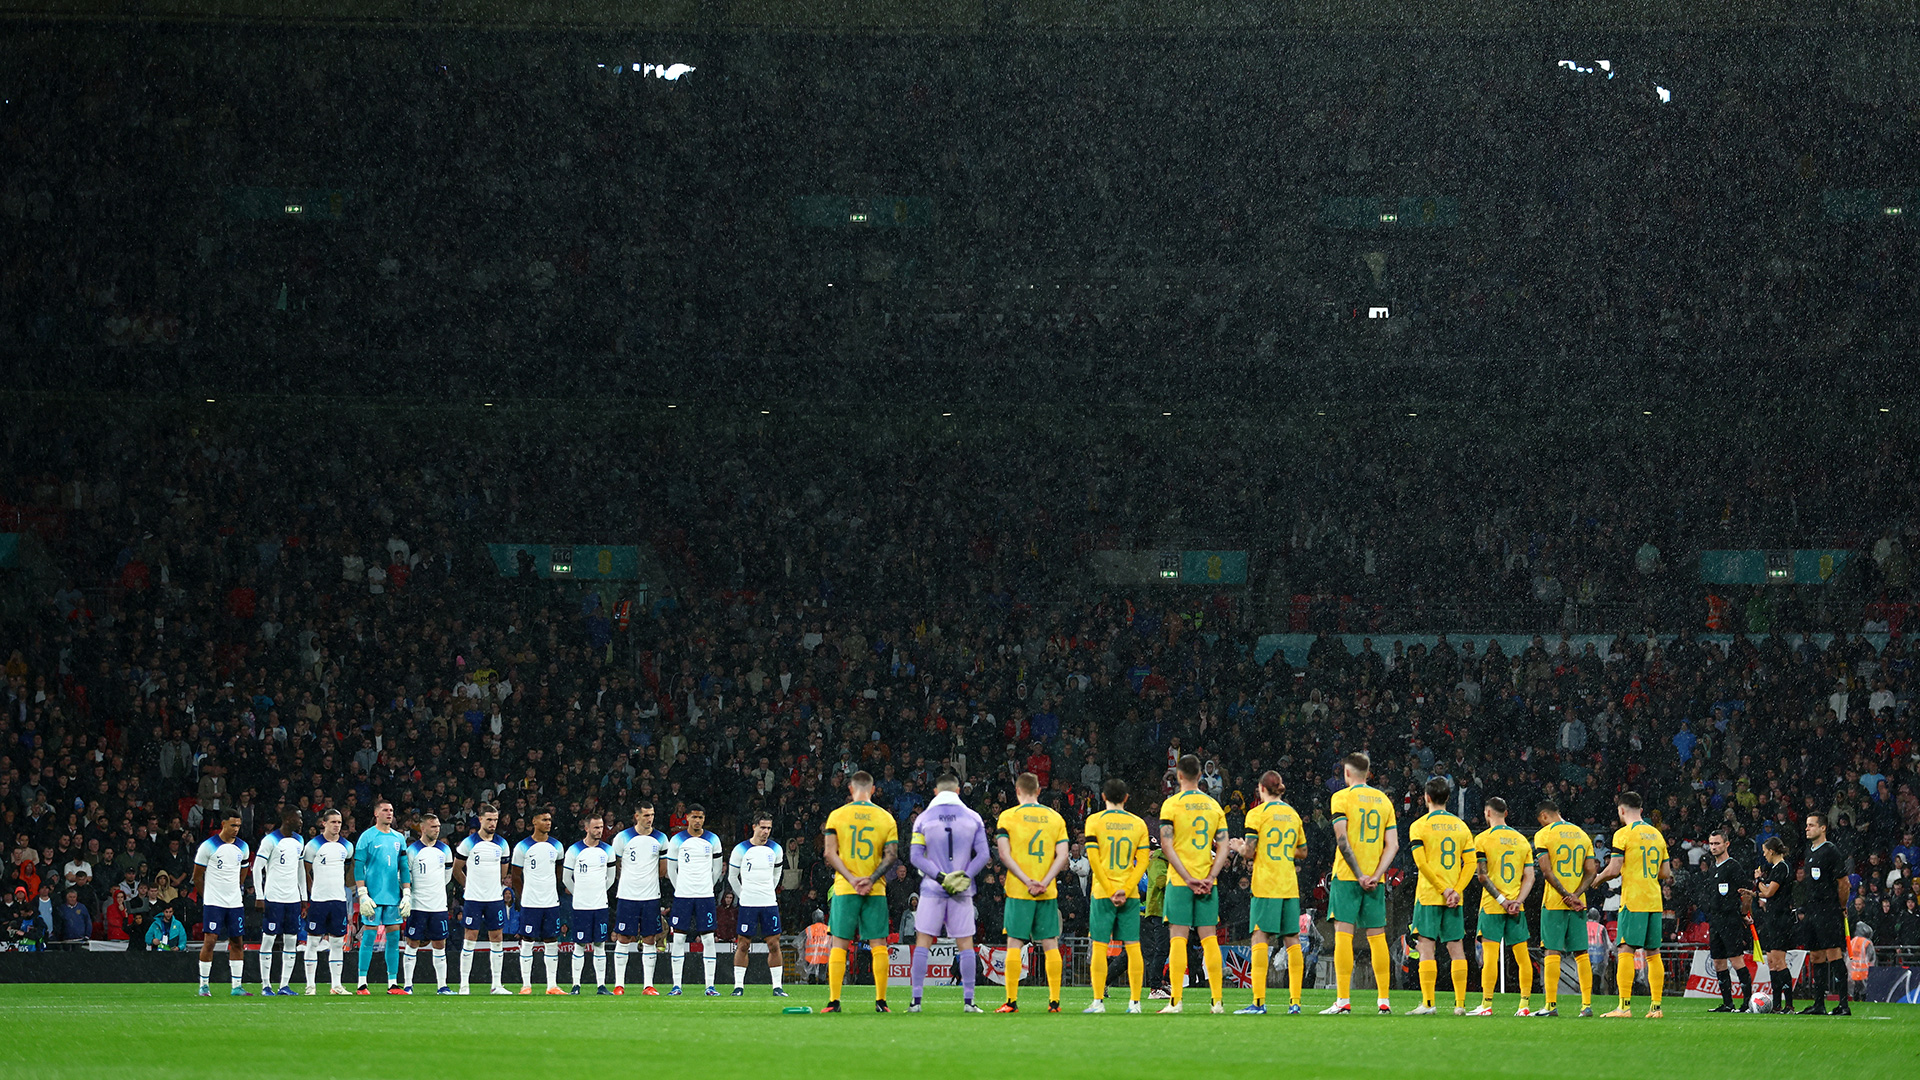 Socceroos vs England at Wembley Stadium